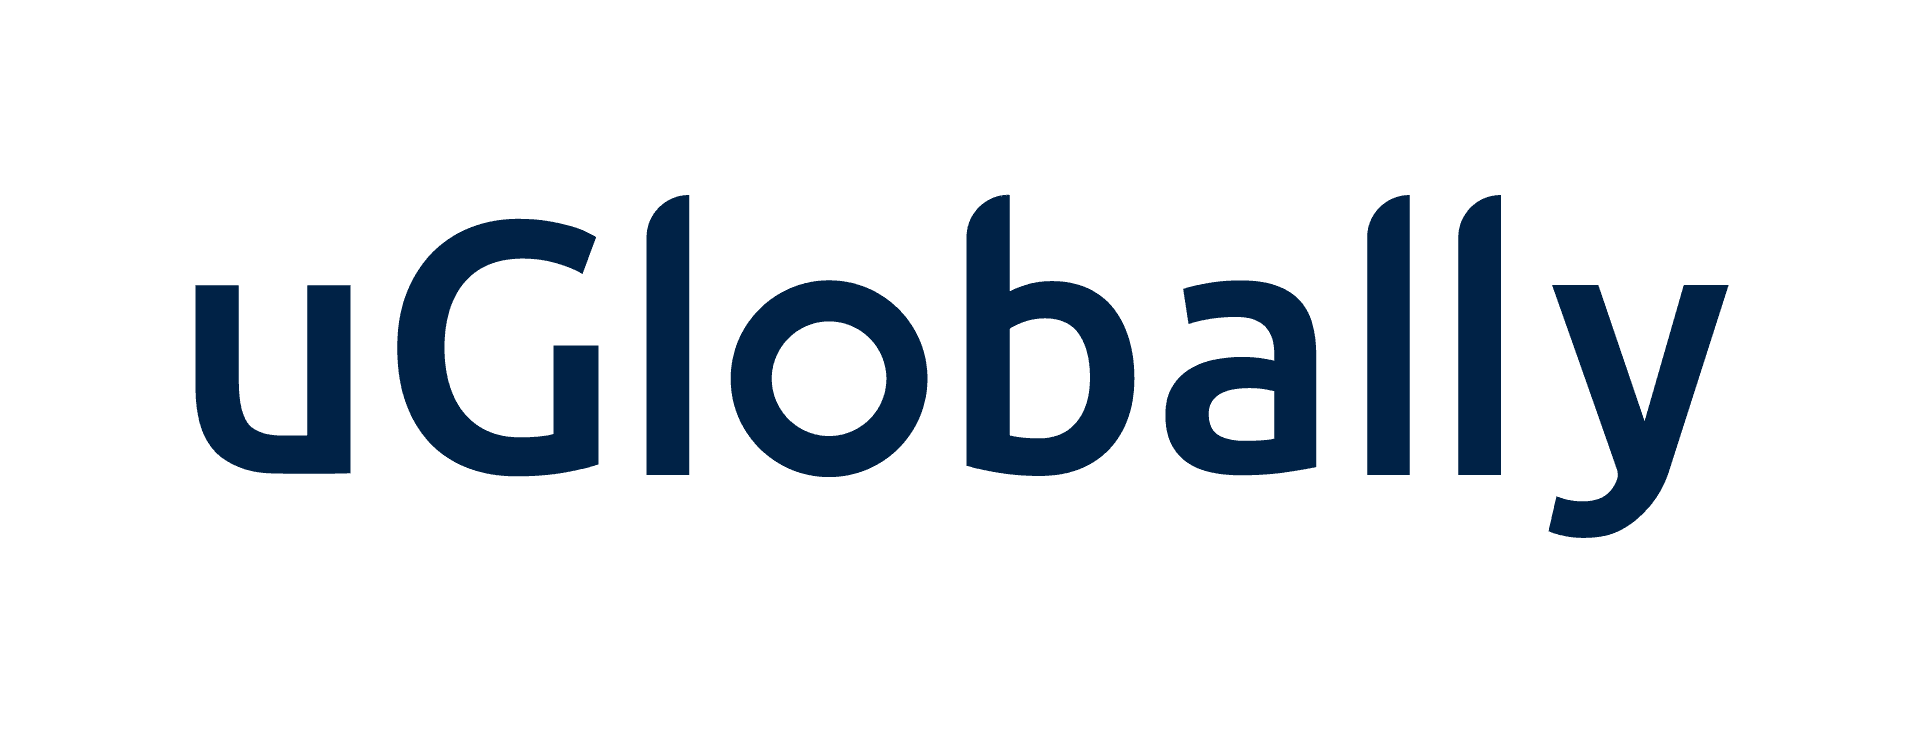 uGlobalys logotyp